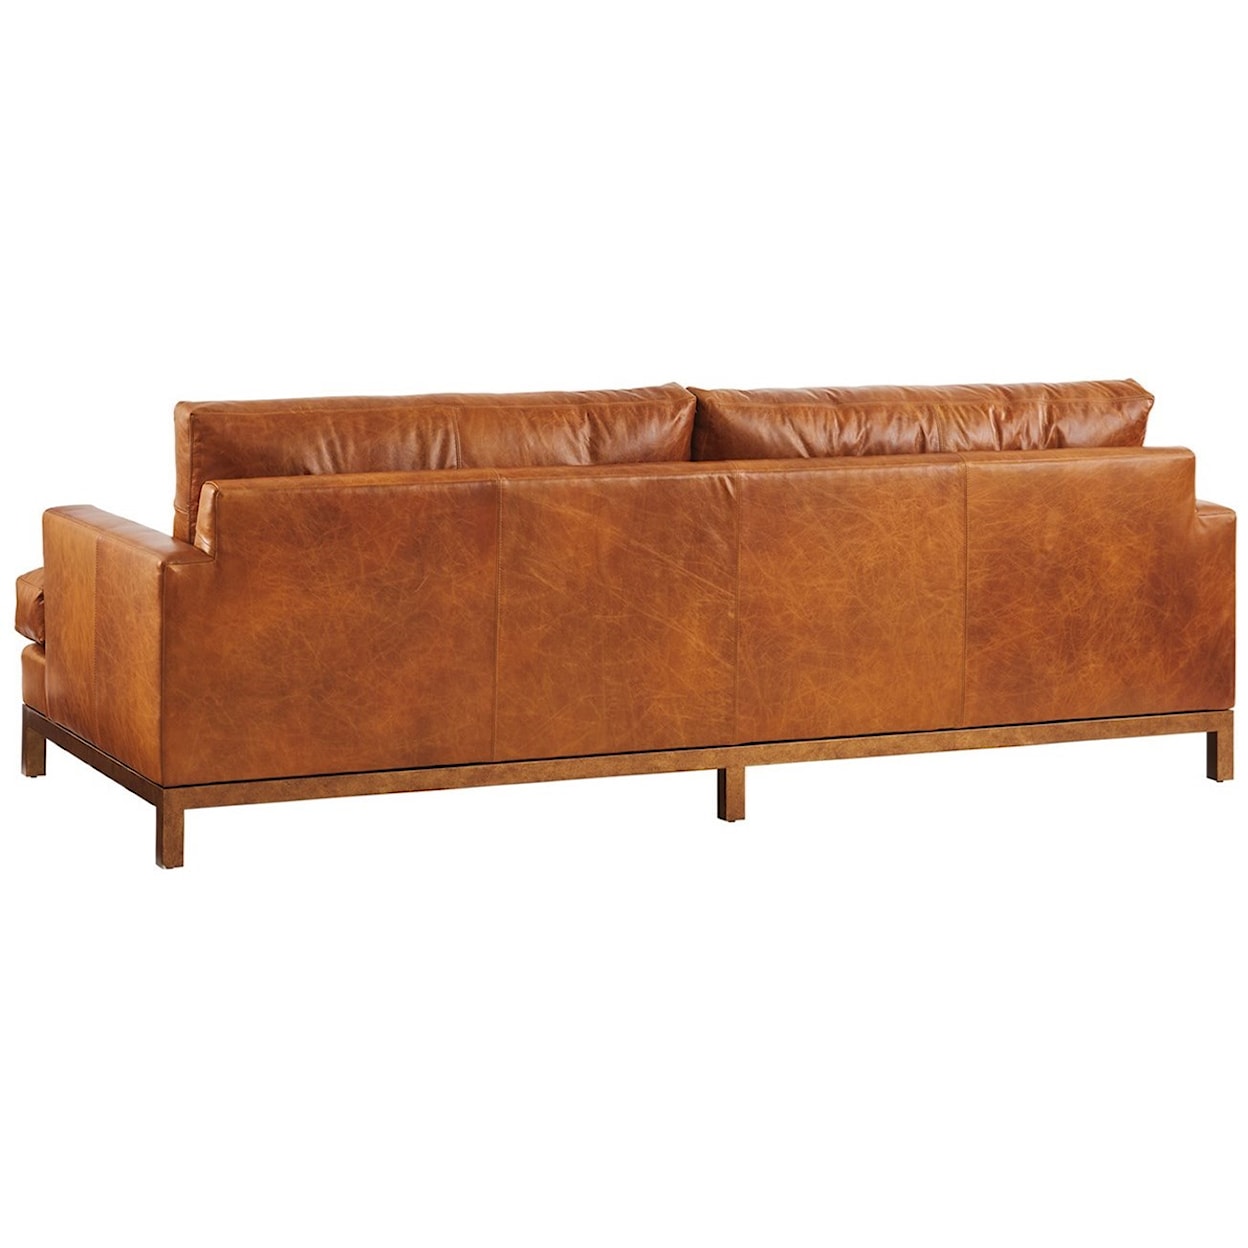 Barclay Butera Barclay Butera Upholstery Horizon Sofa w/ Tan Leather & Brass Base